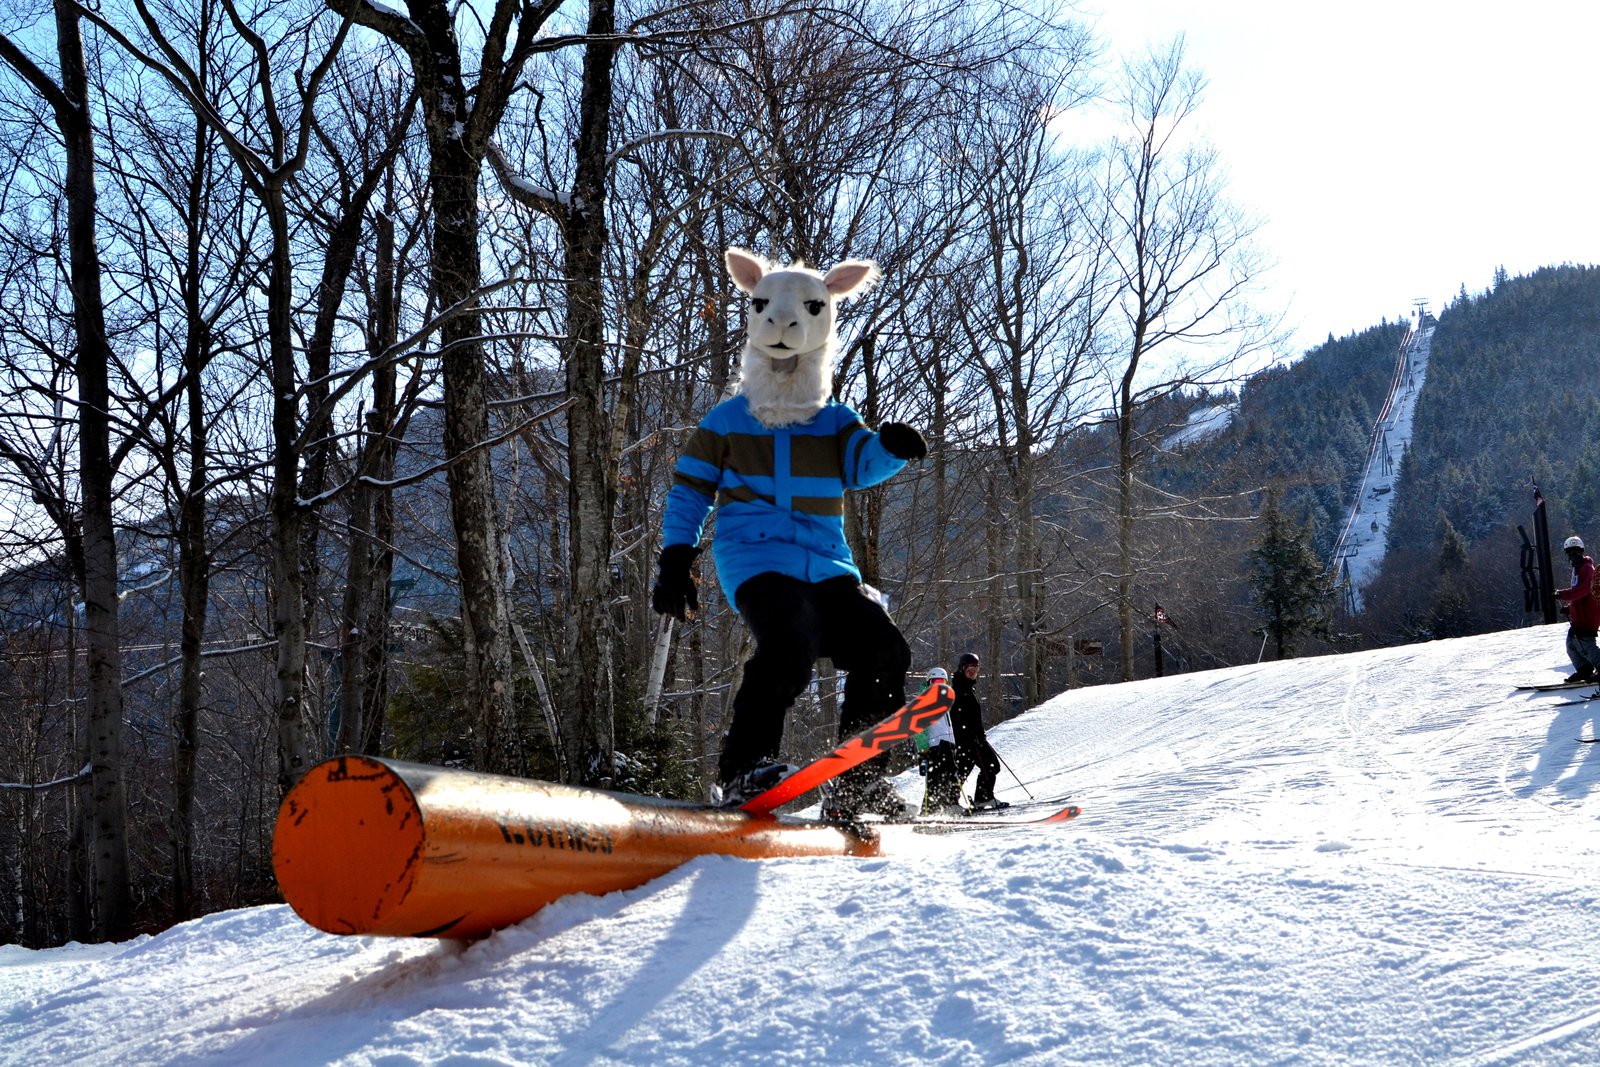 Llamas can ski too